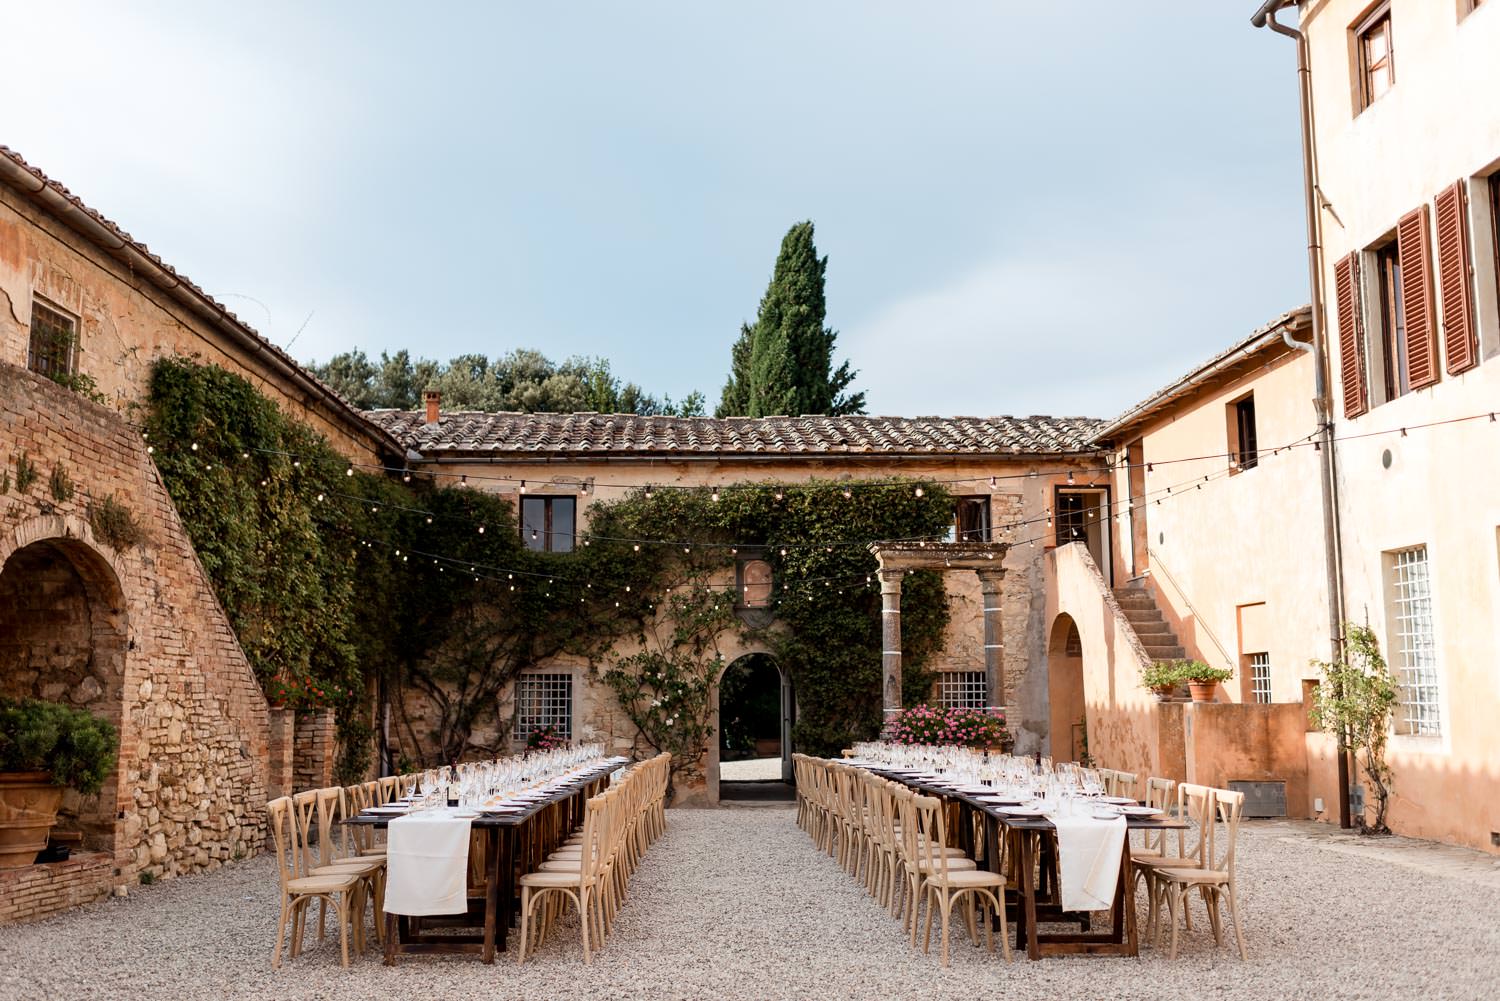 Villa Catignano Wedding Venue, Tuscany - Wedinspire